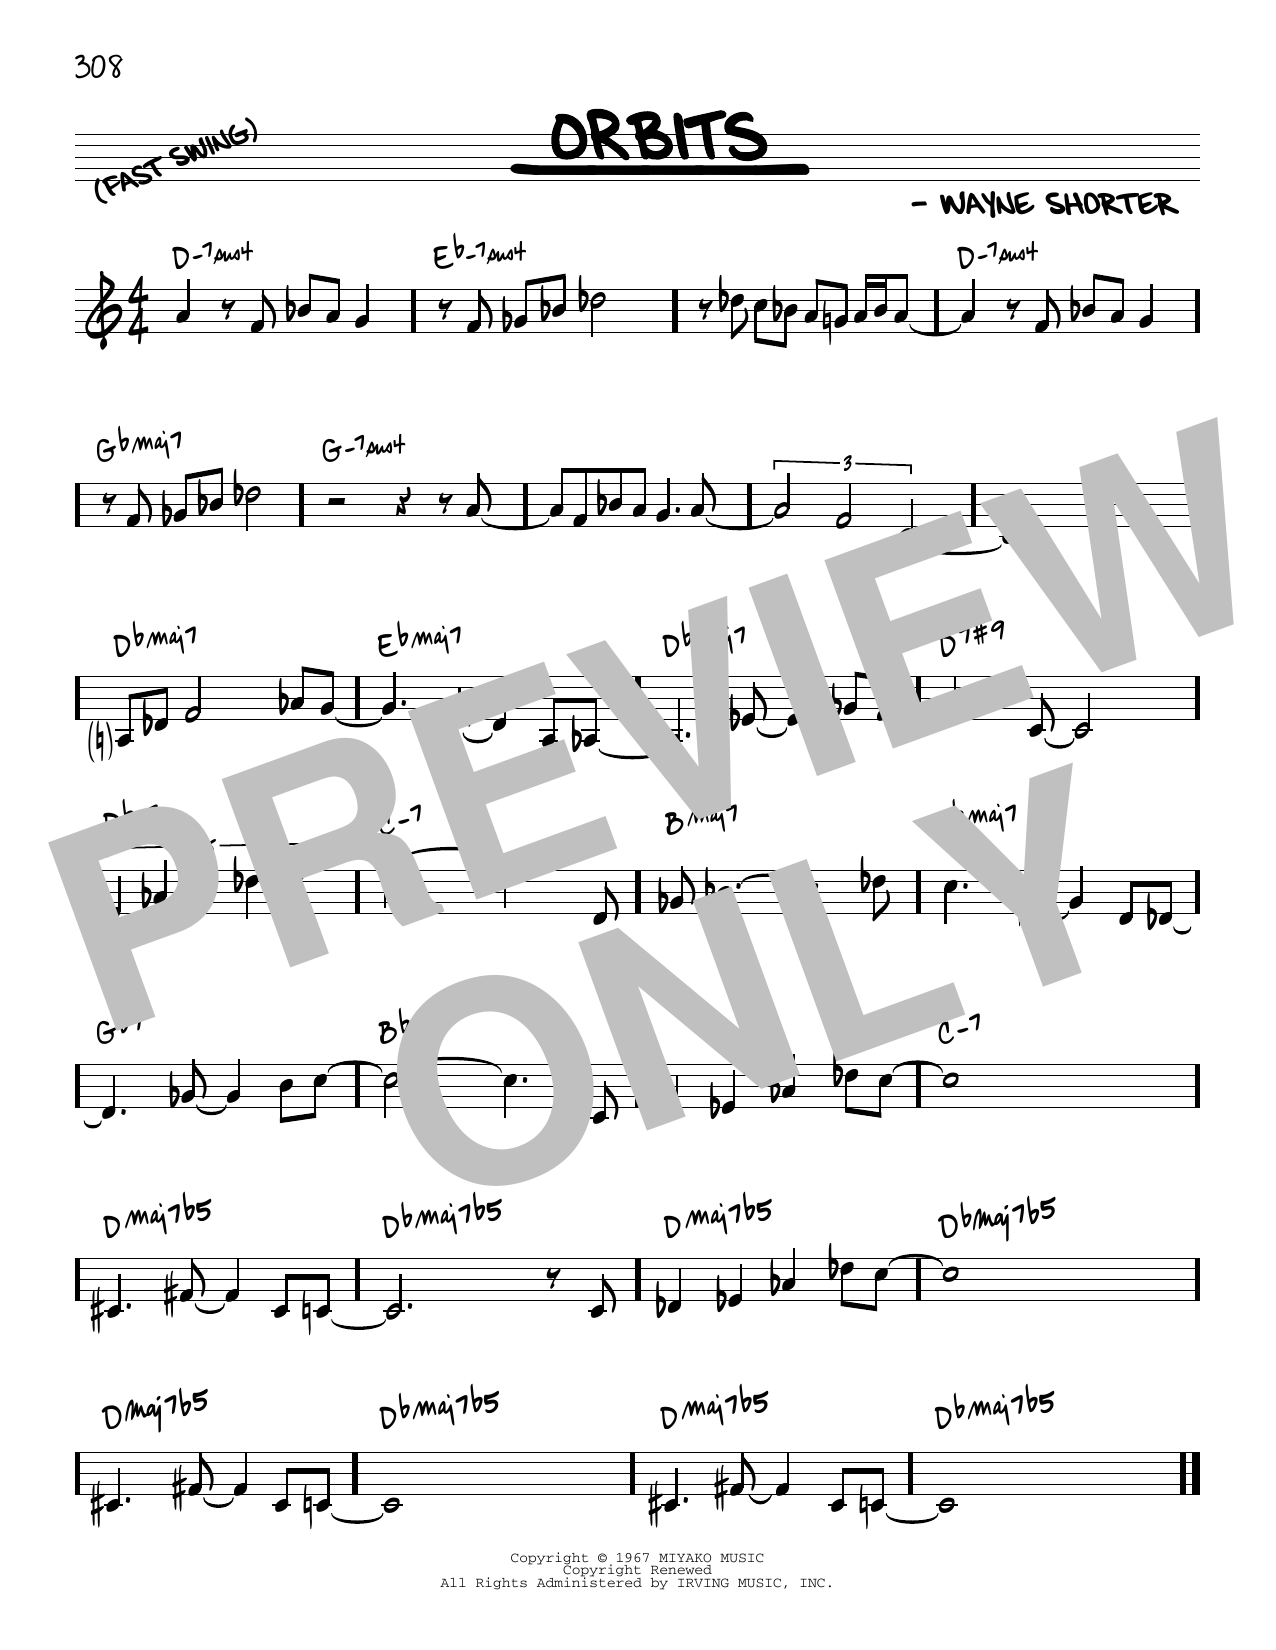 Download Wayne Shorter Orbits [Reharmonized version] (arr. Jac Sheet Music